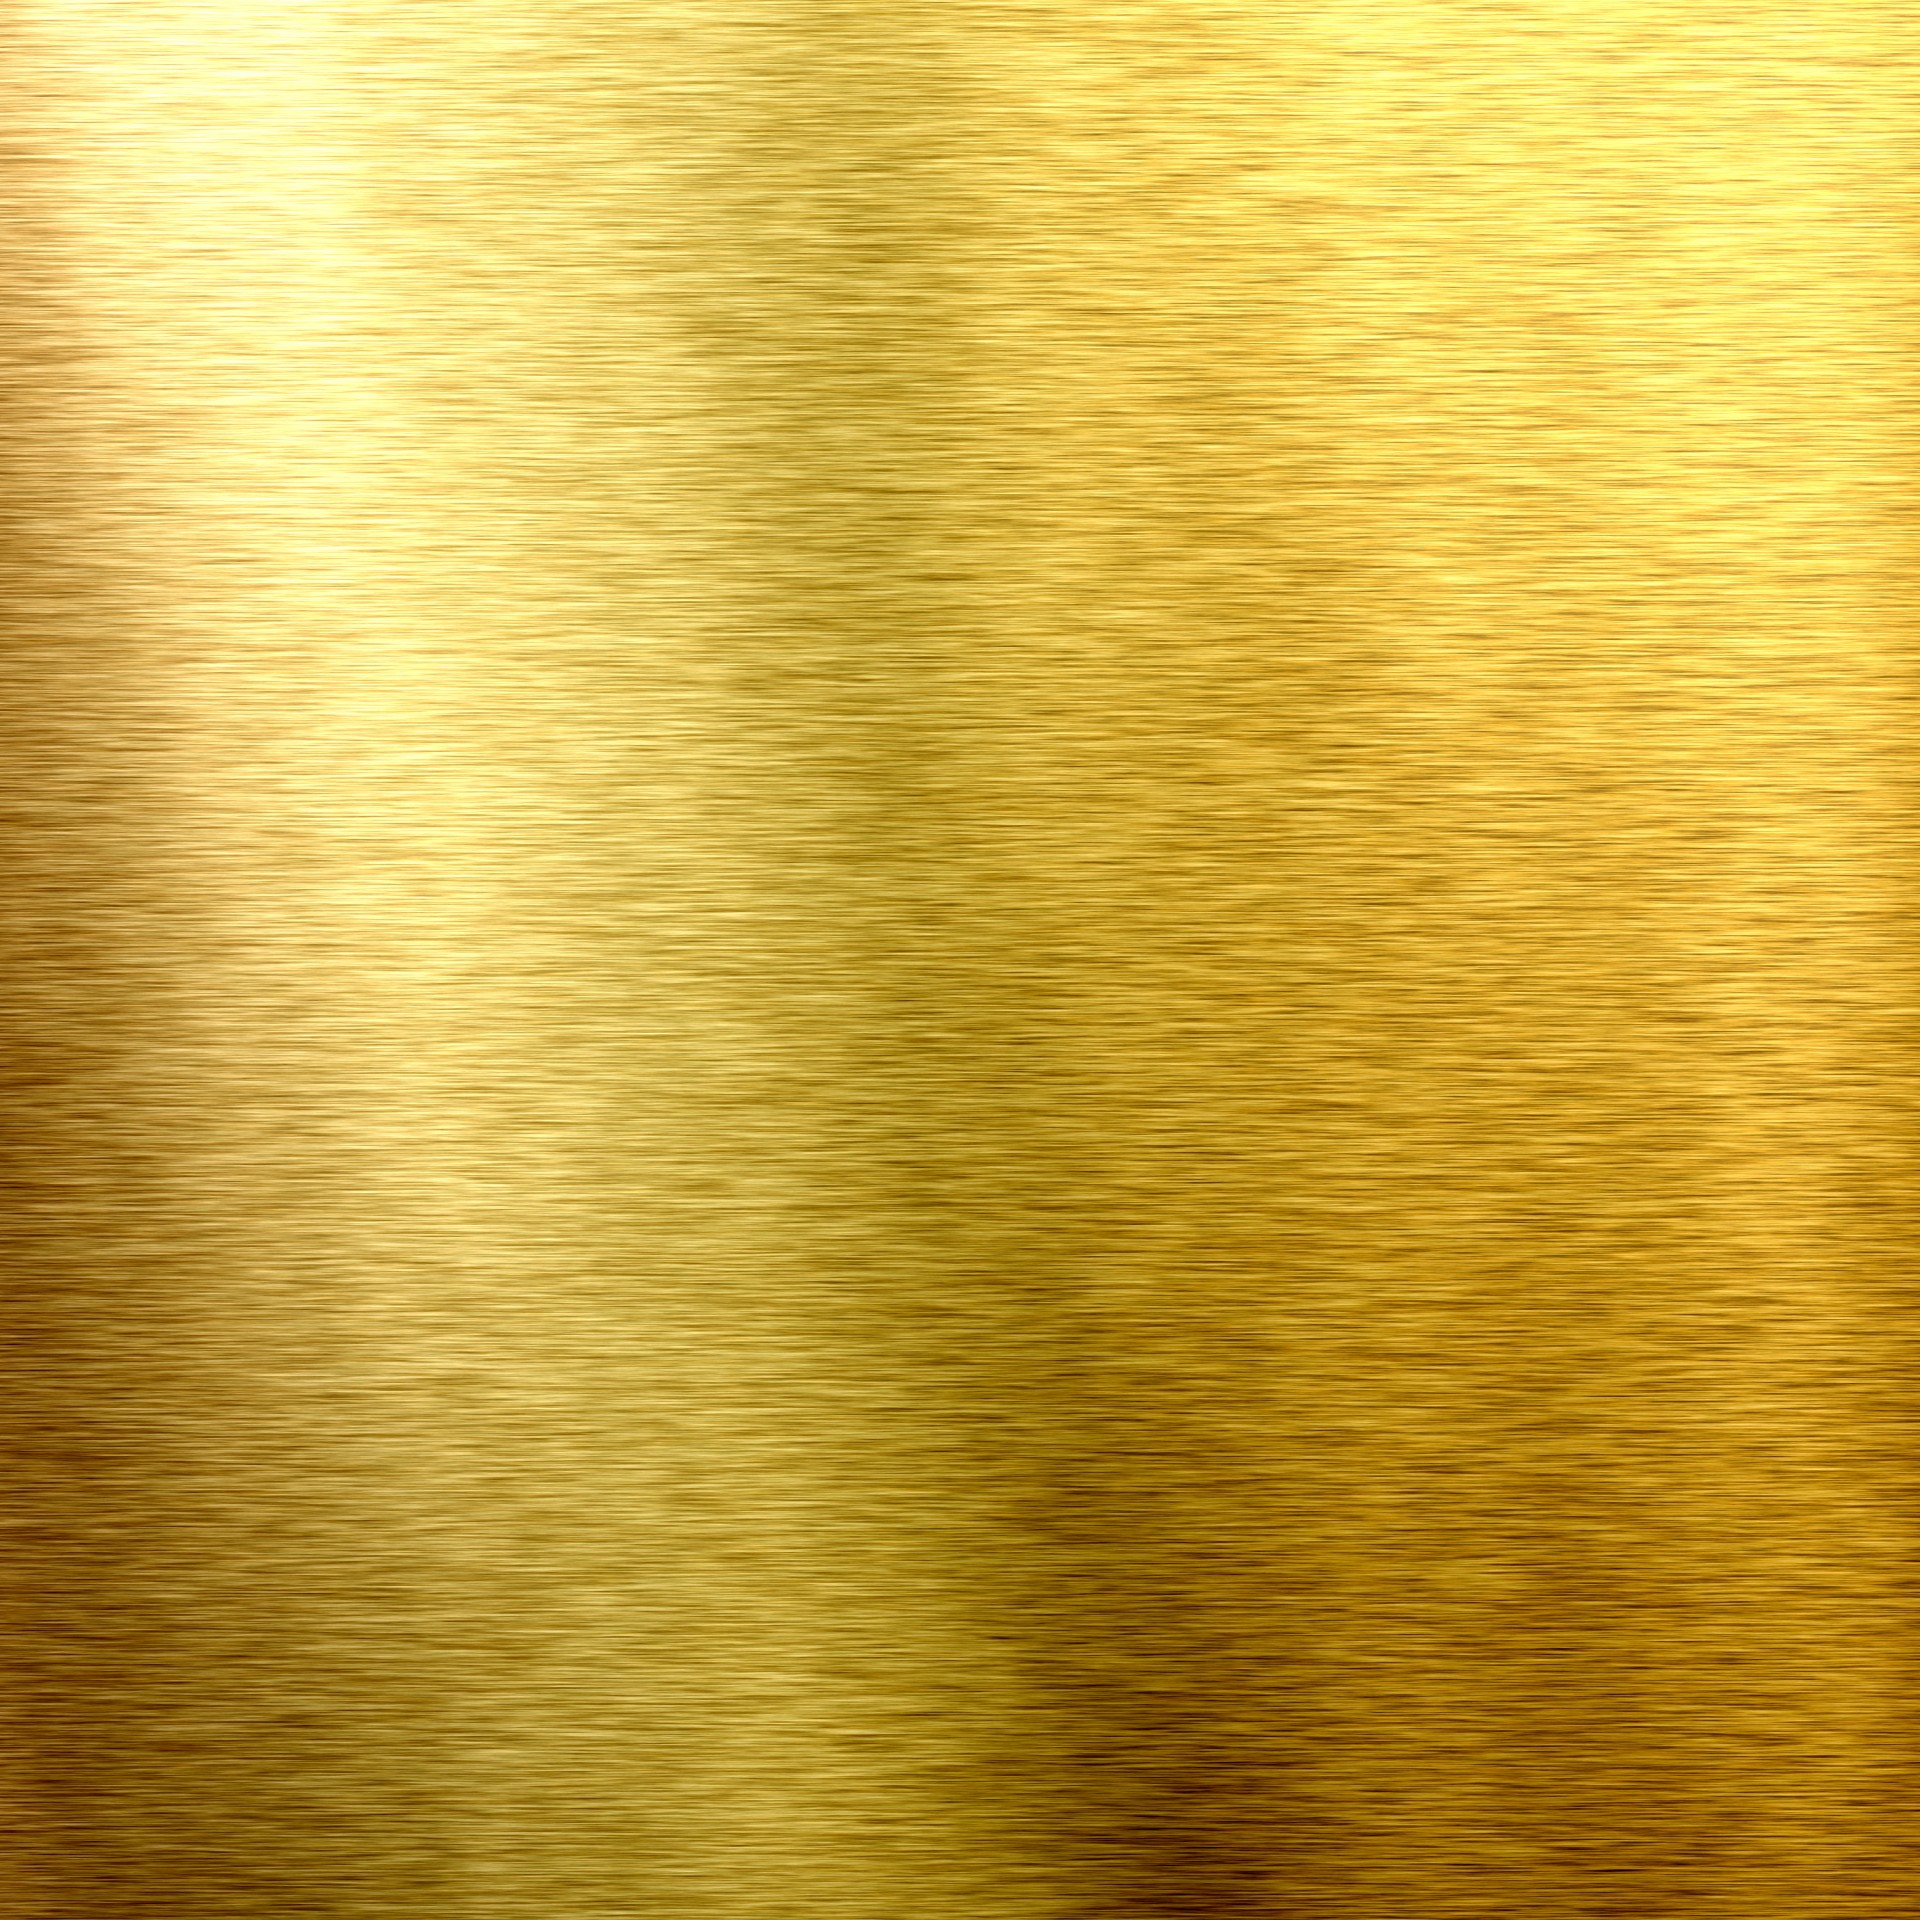 Текстура золотистого металла